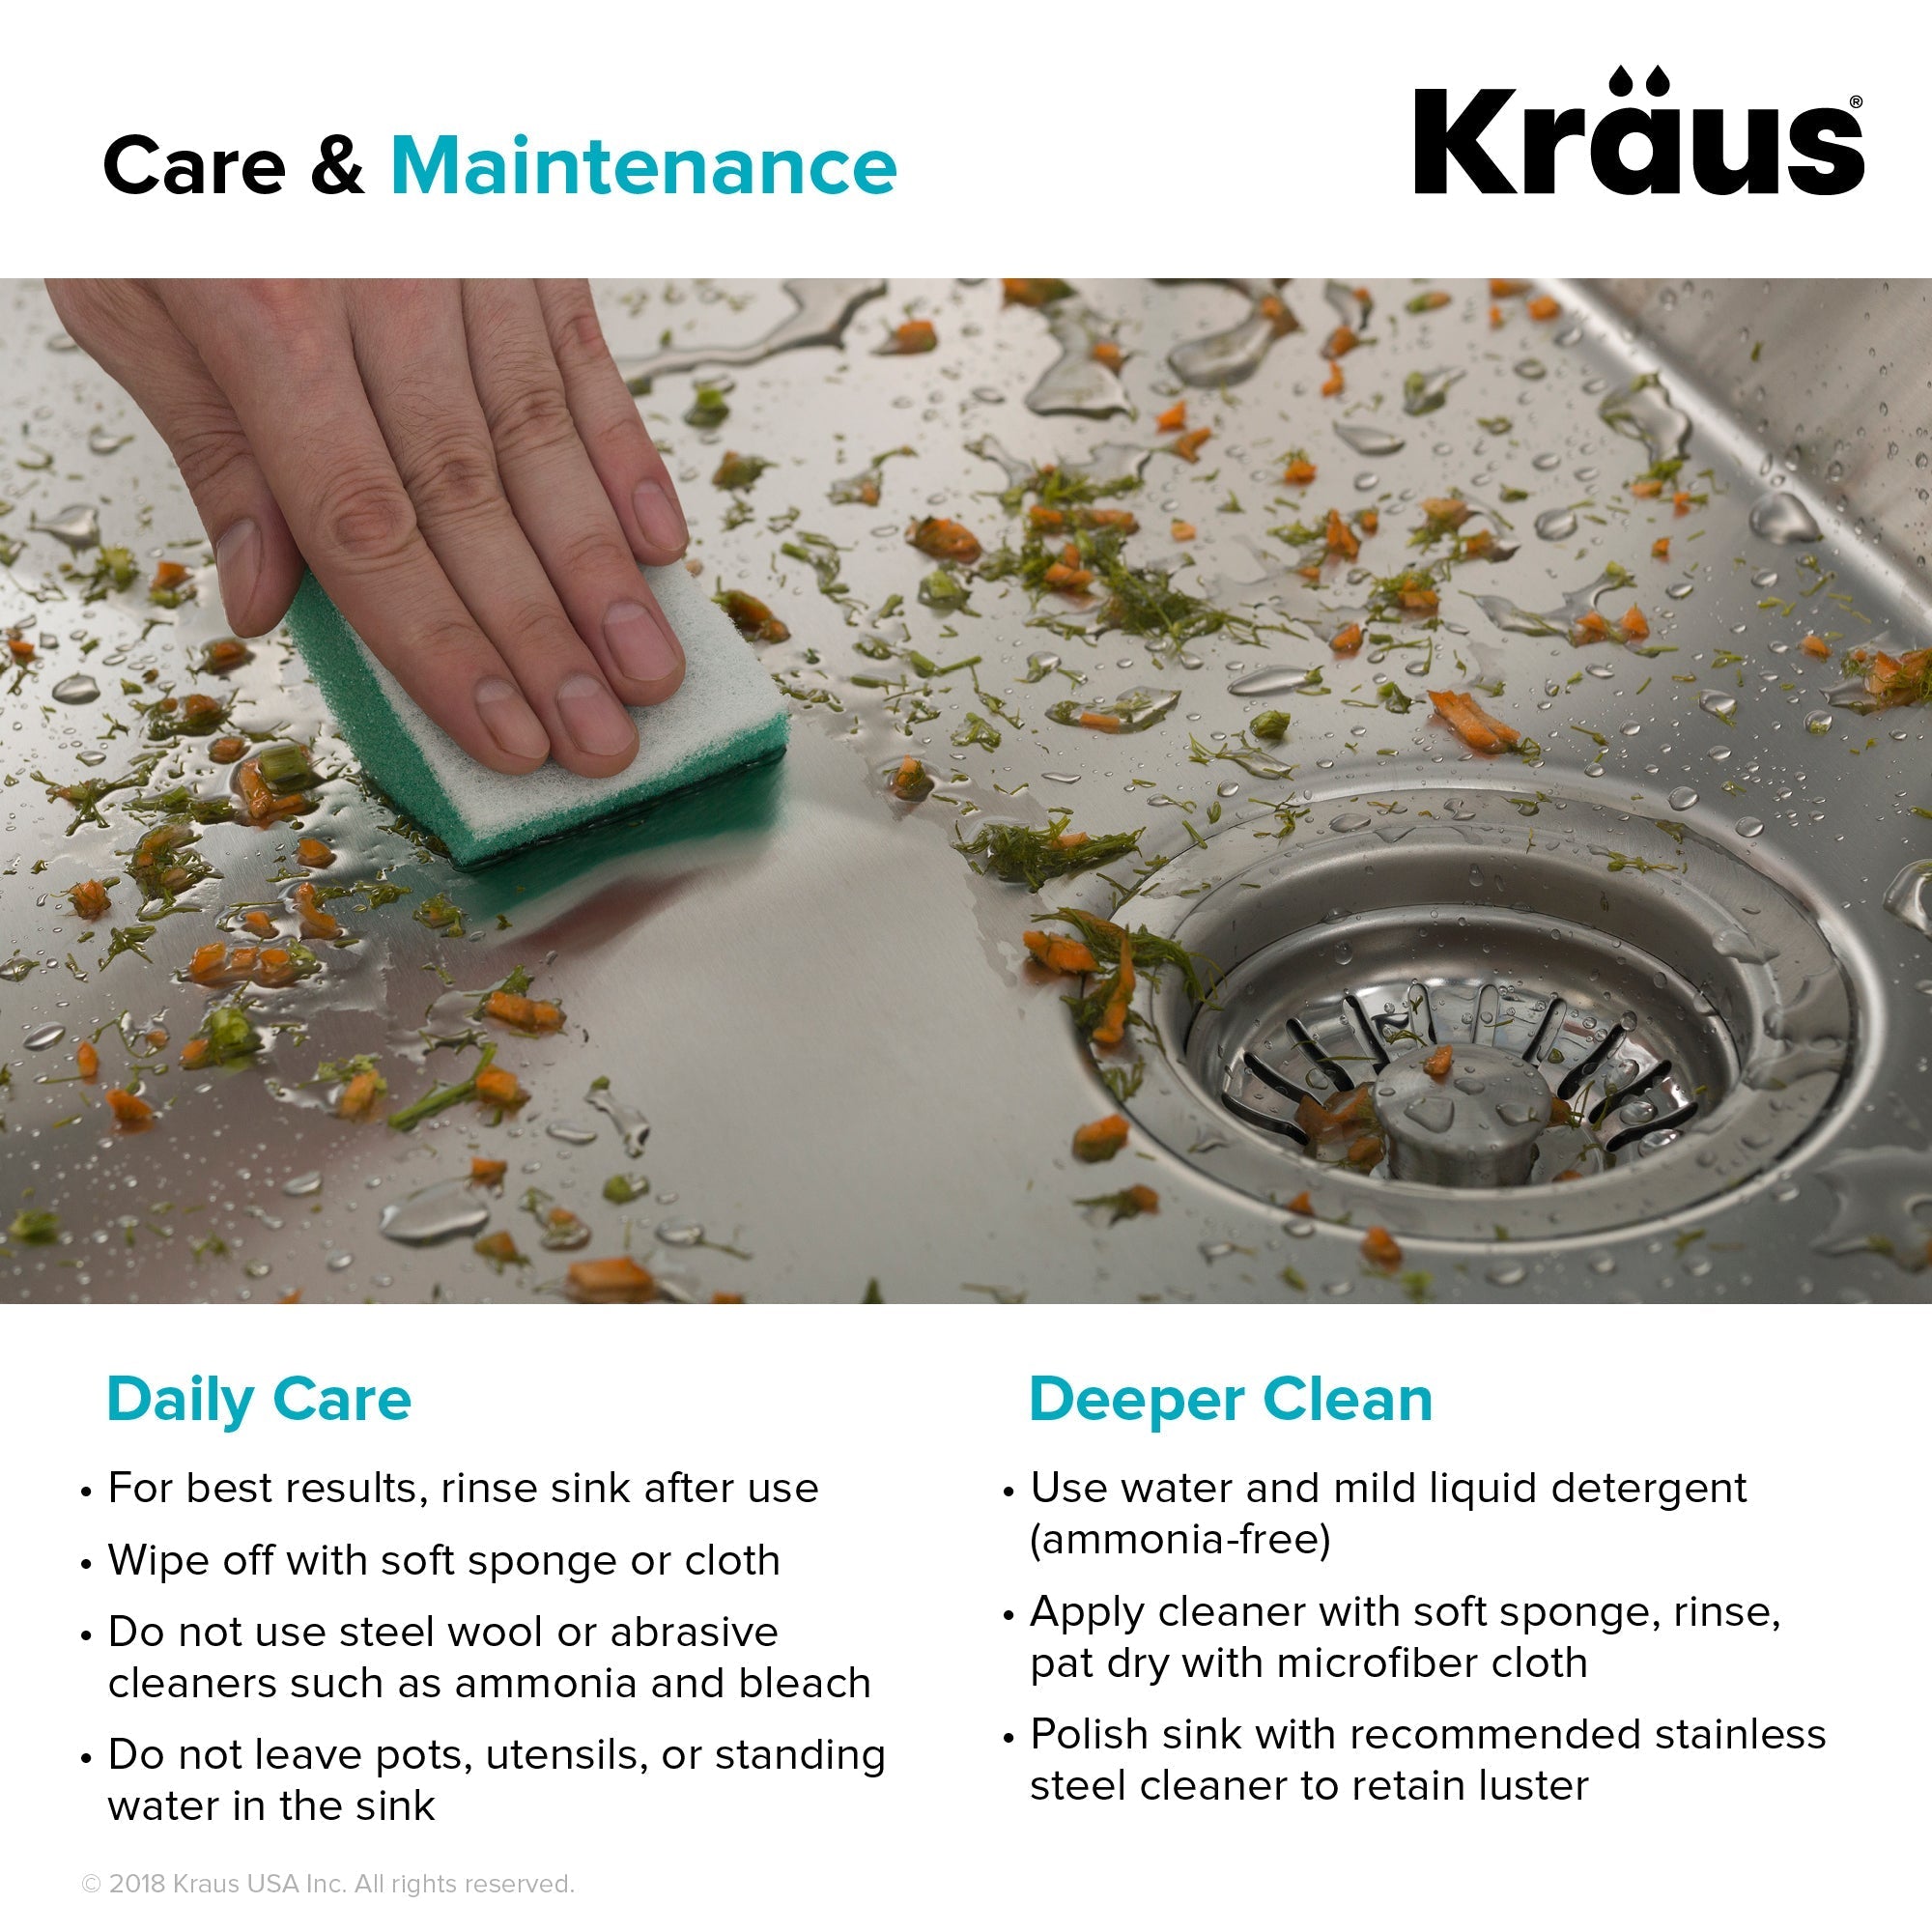 KRAUS 33" x 22" Pax Drop-In Topmount Zero-Radius Double Bowl Stainless Kitchen Sink-Kitchen Sinks-DirectSinks